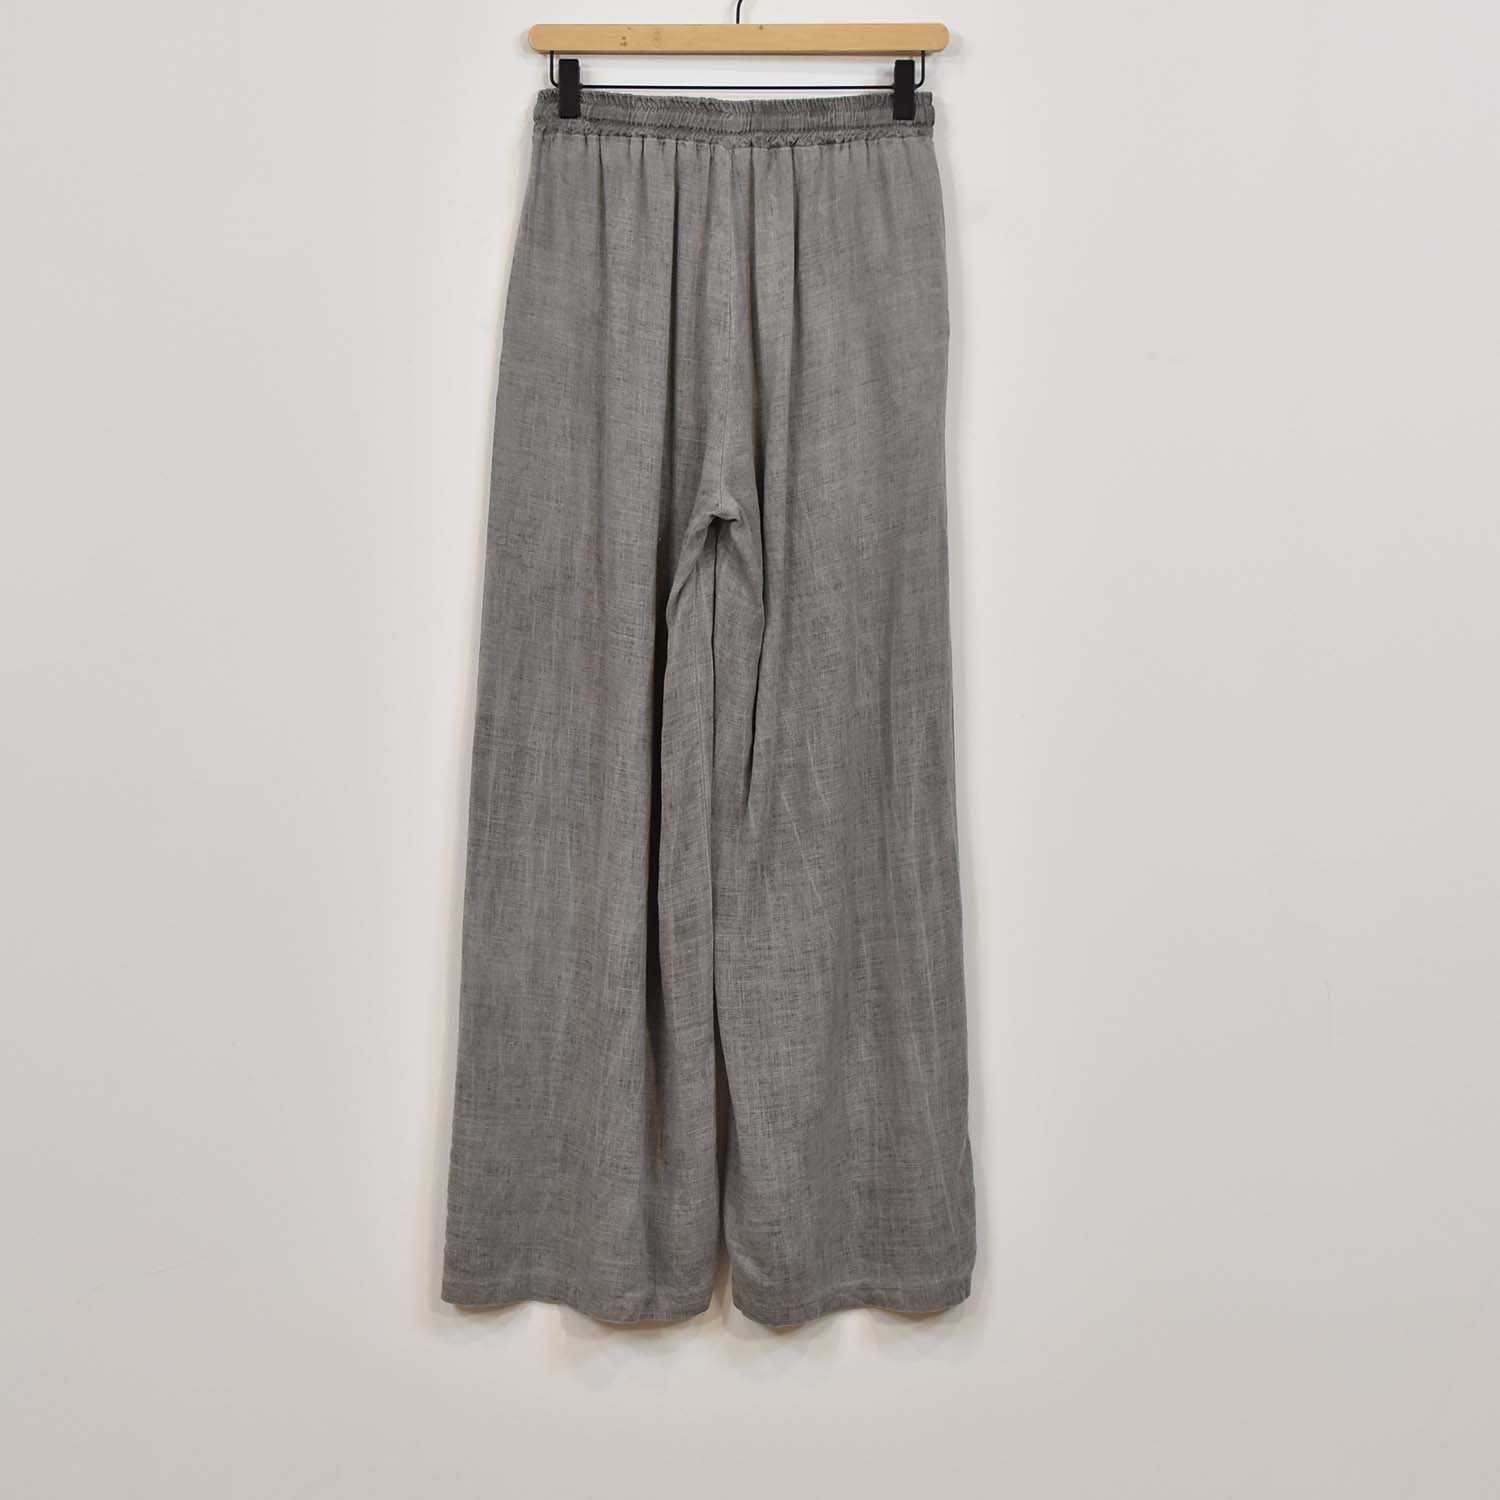 Grey wide pockets pants